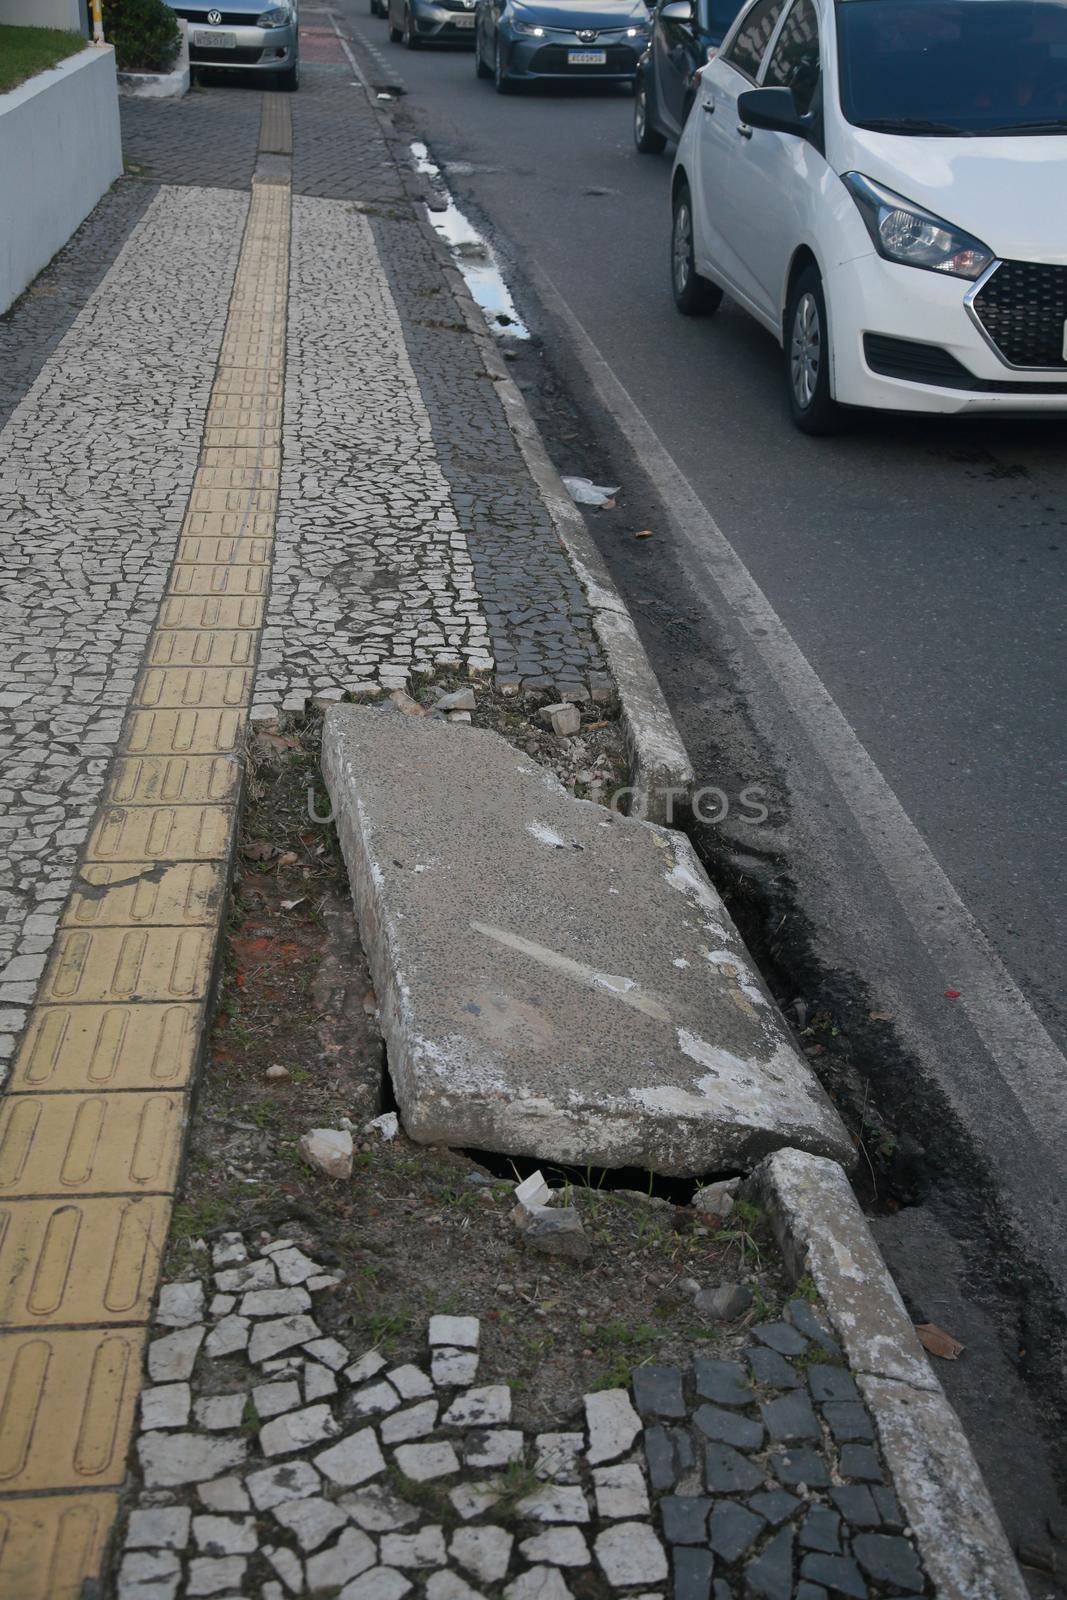 salvador, bahia, brazil - july 19, 2022: Pedestrian sidewalk with damaged floor on a street in Salvador city.